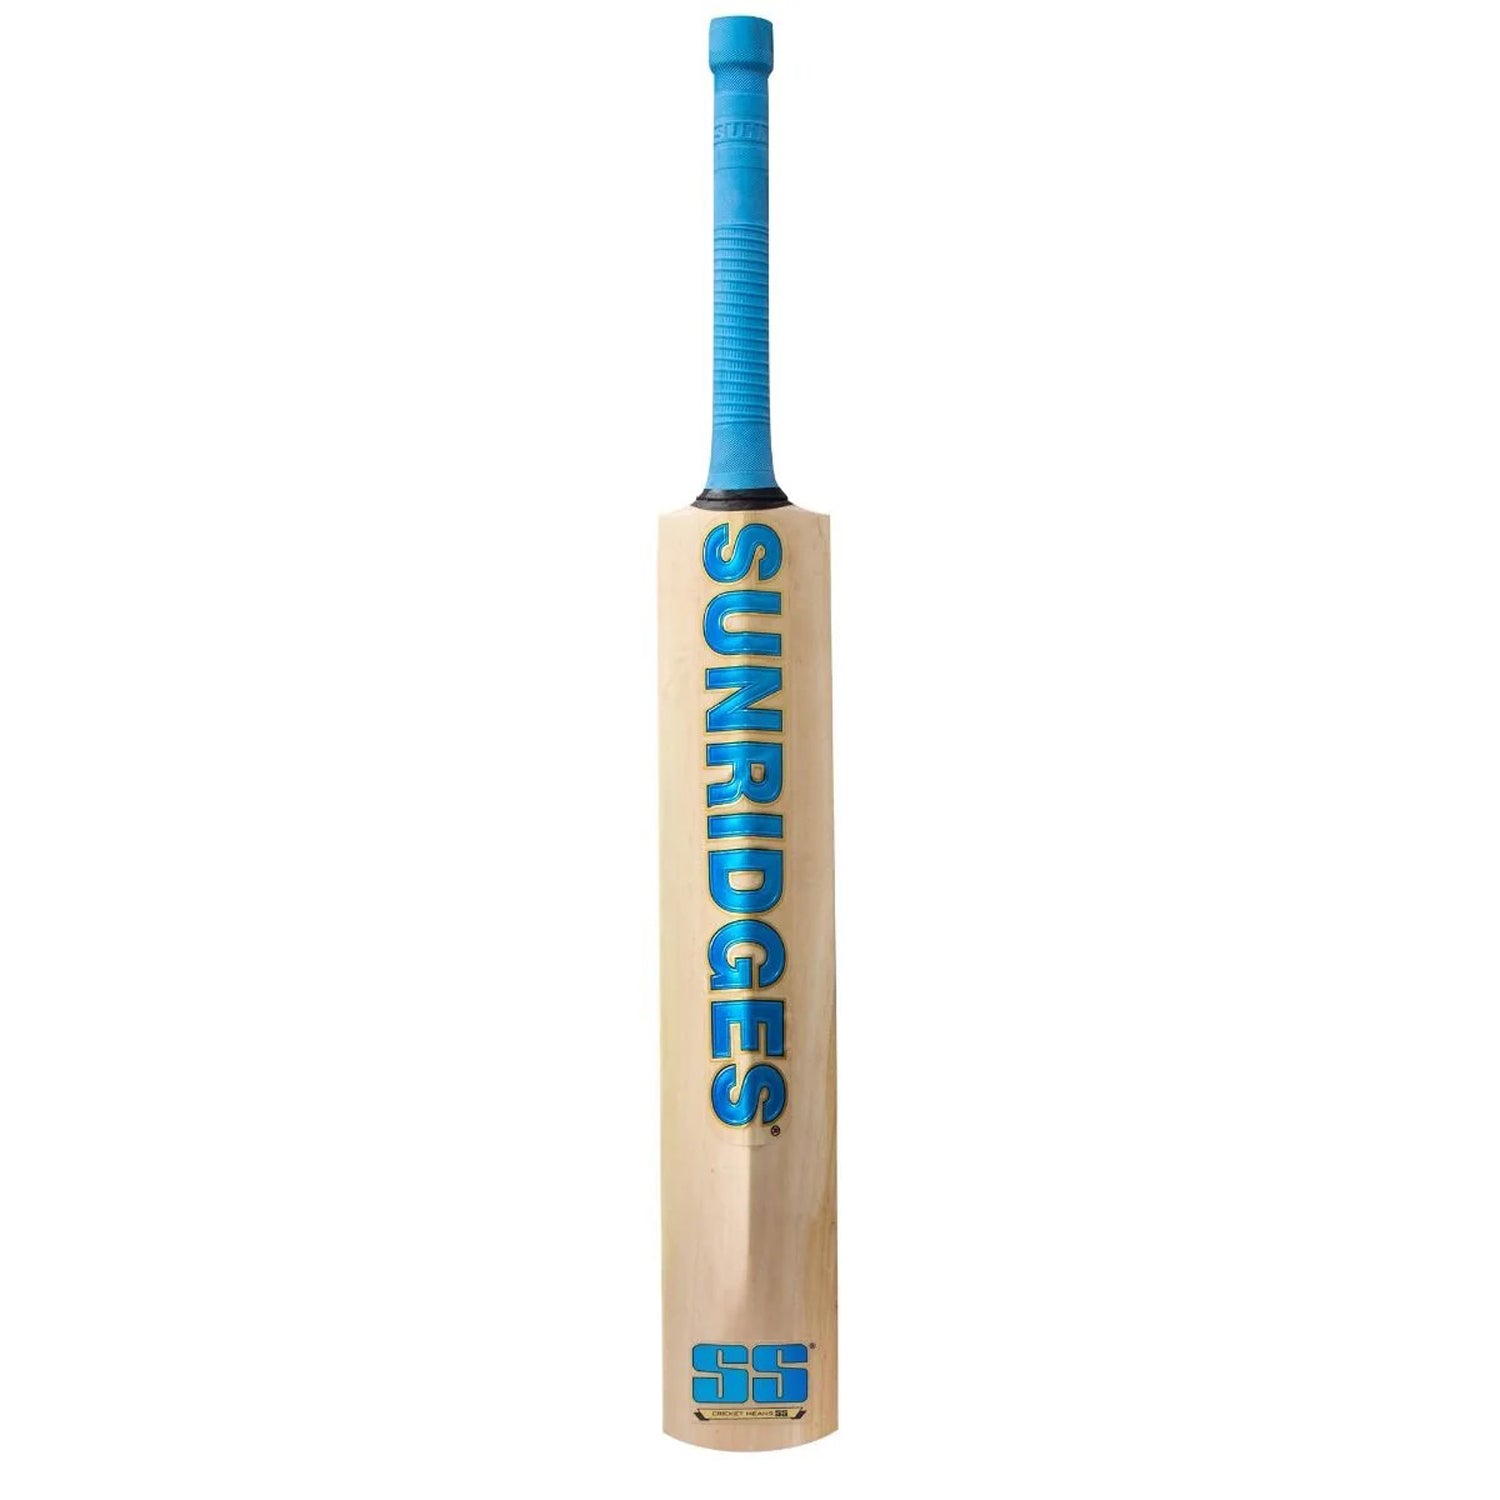 SS Vintage Bolt Kashmir willow Cricket Bat - Best Price online Prokicksports.com